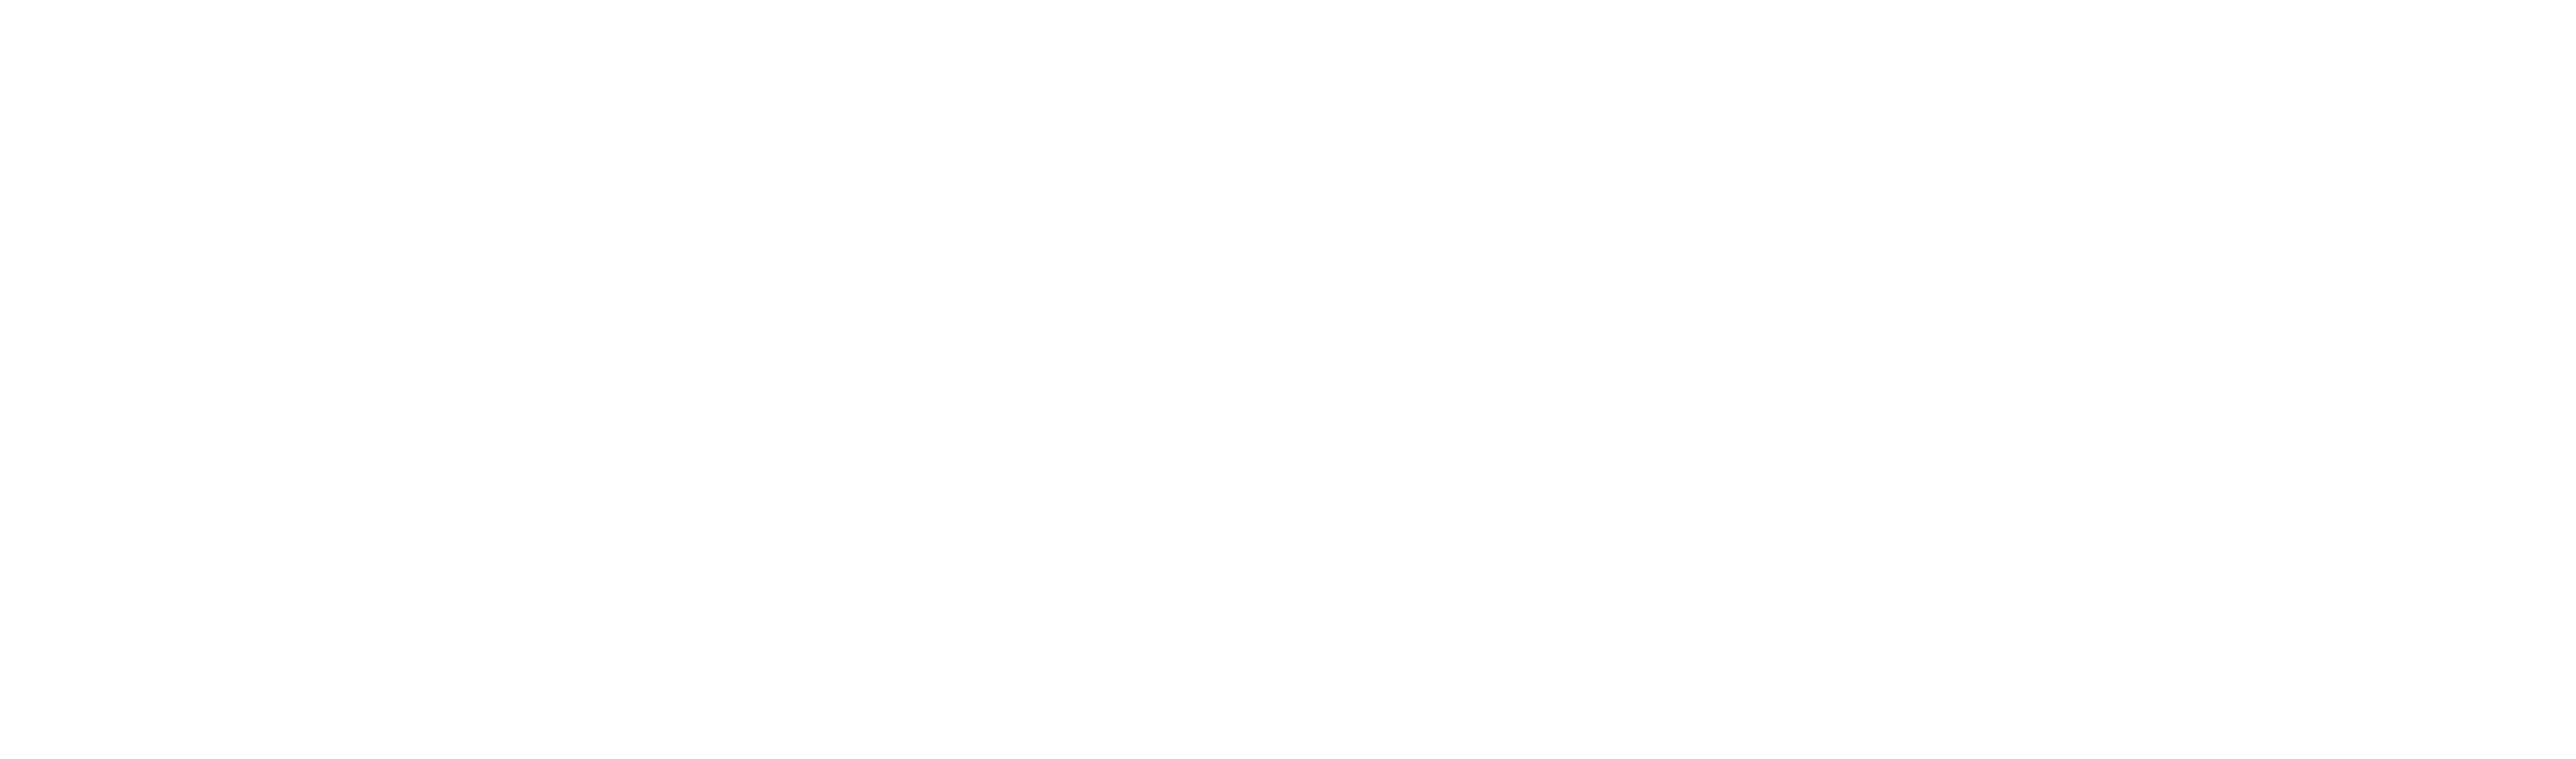 Drug and Alcohol Service - York white logo